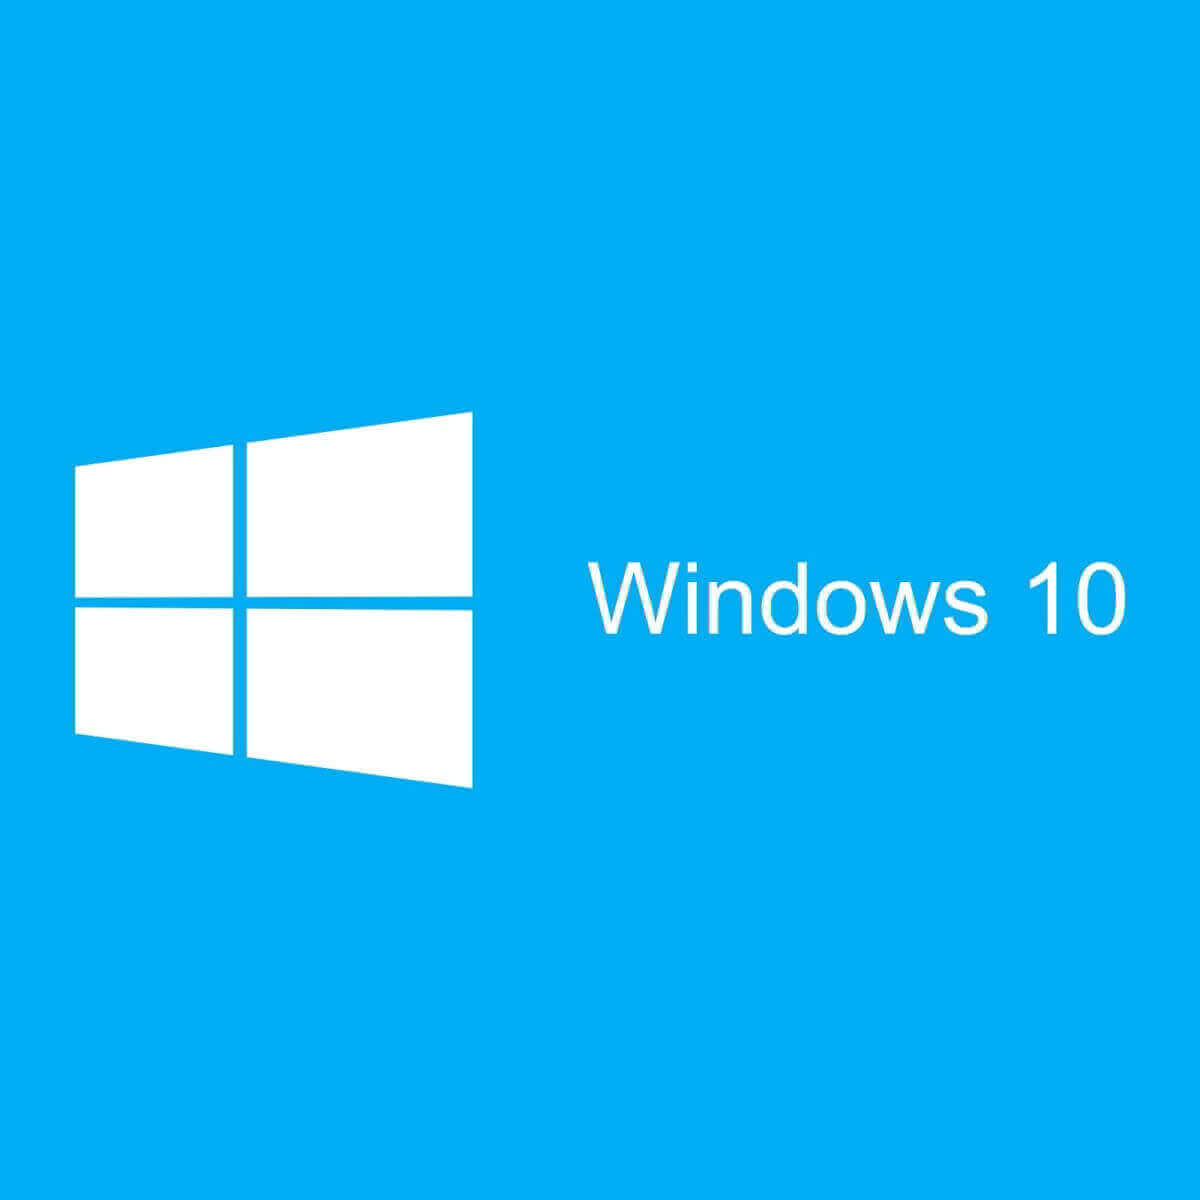 Run Windows 10 on a chromebook